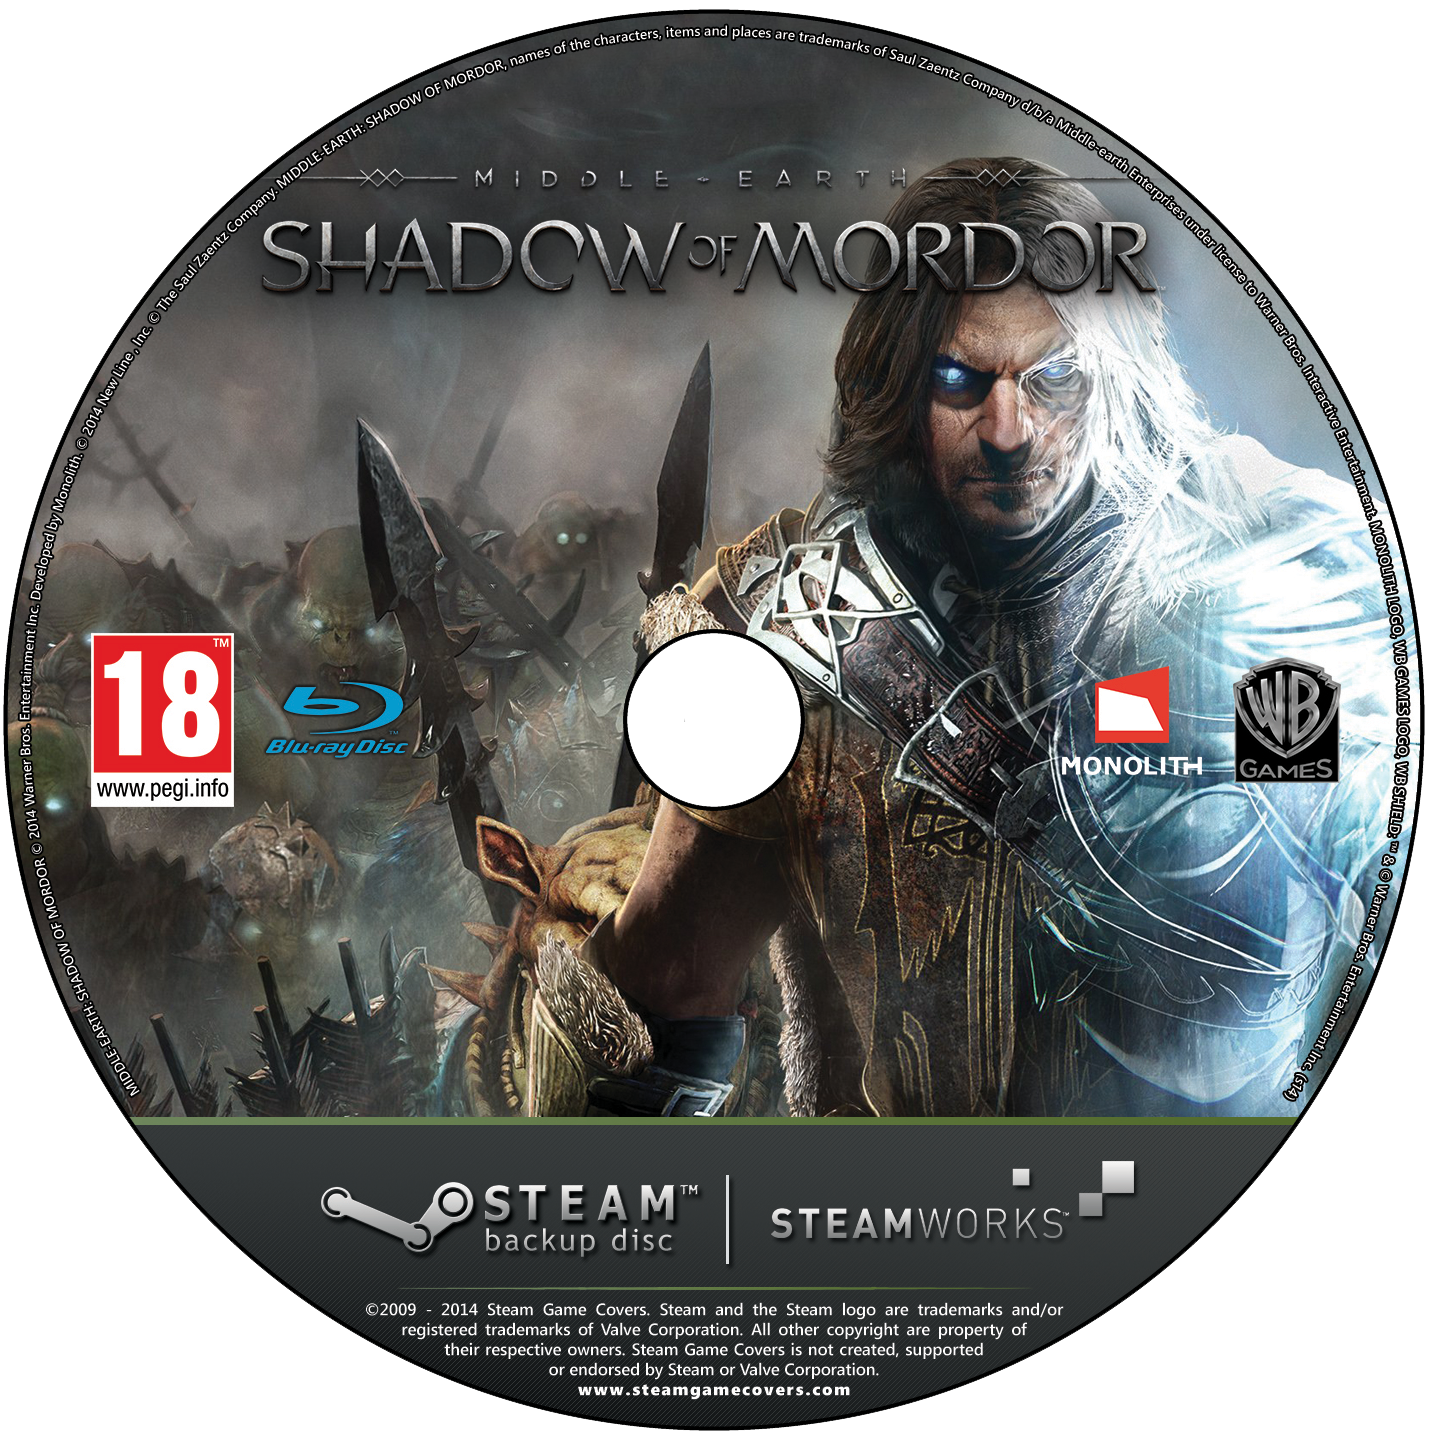 gamescom 2014: Middle-earth: Shadow of Mordor Packs Secrets